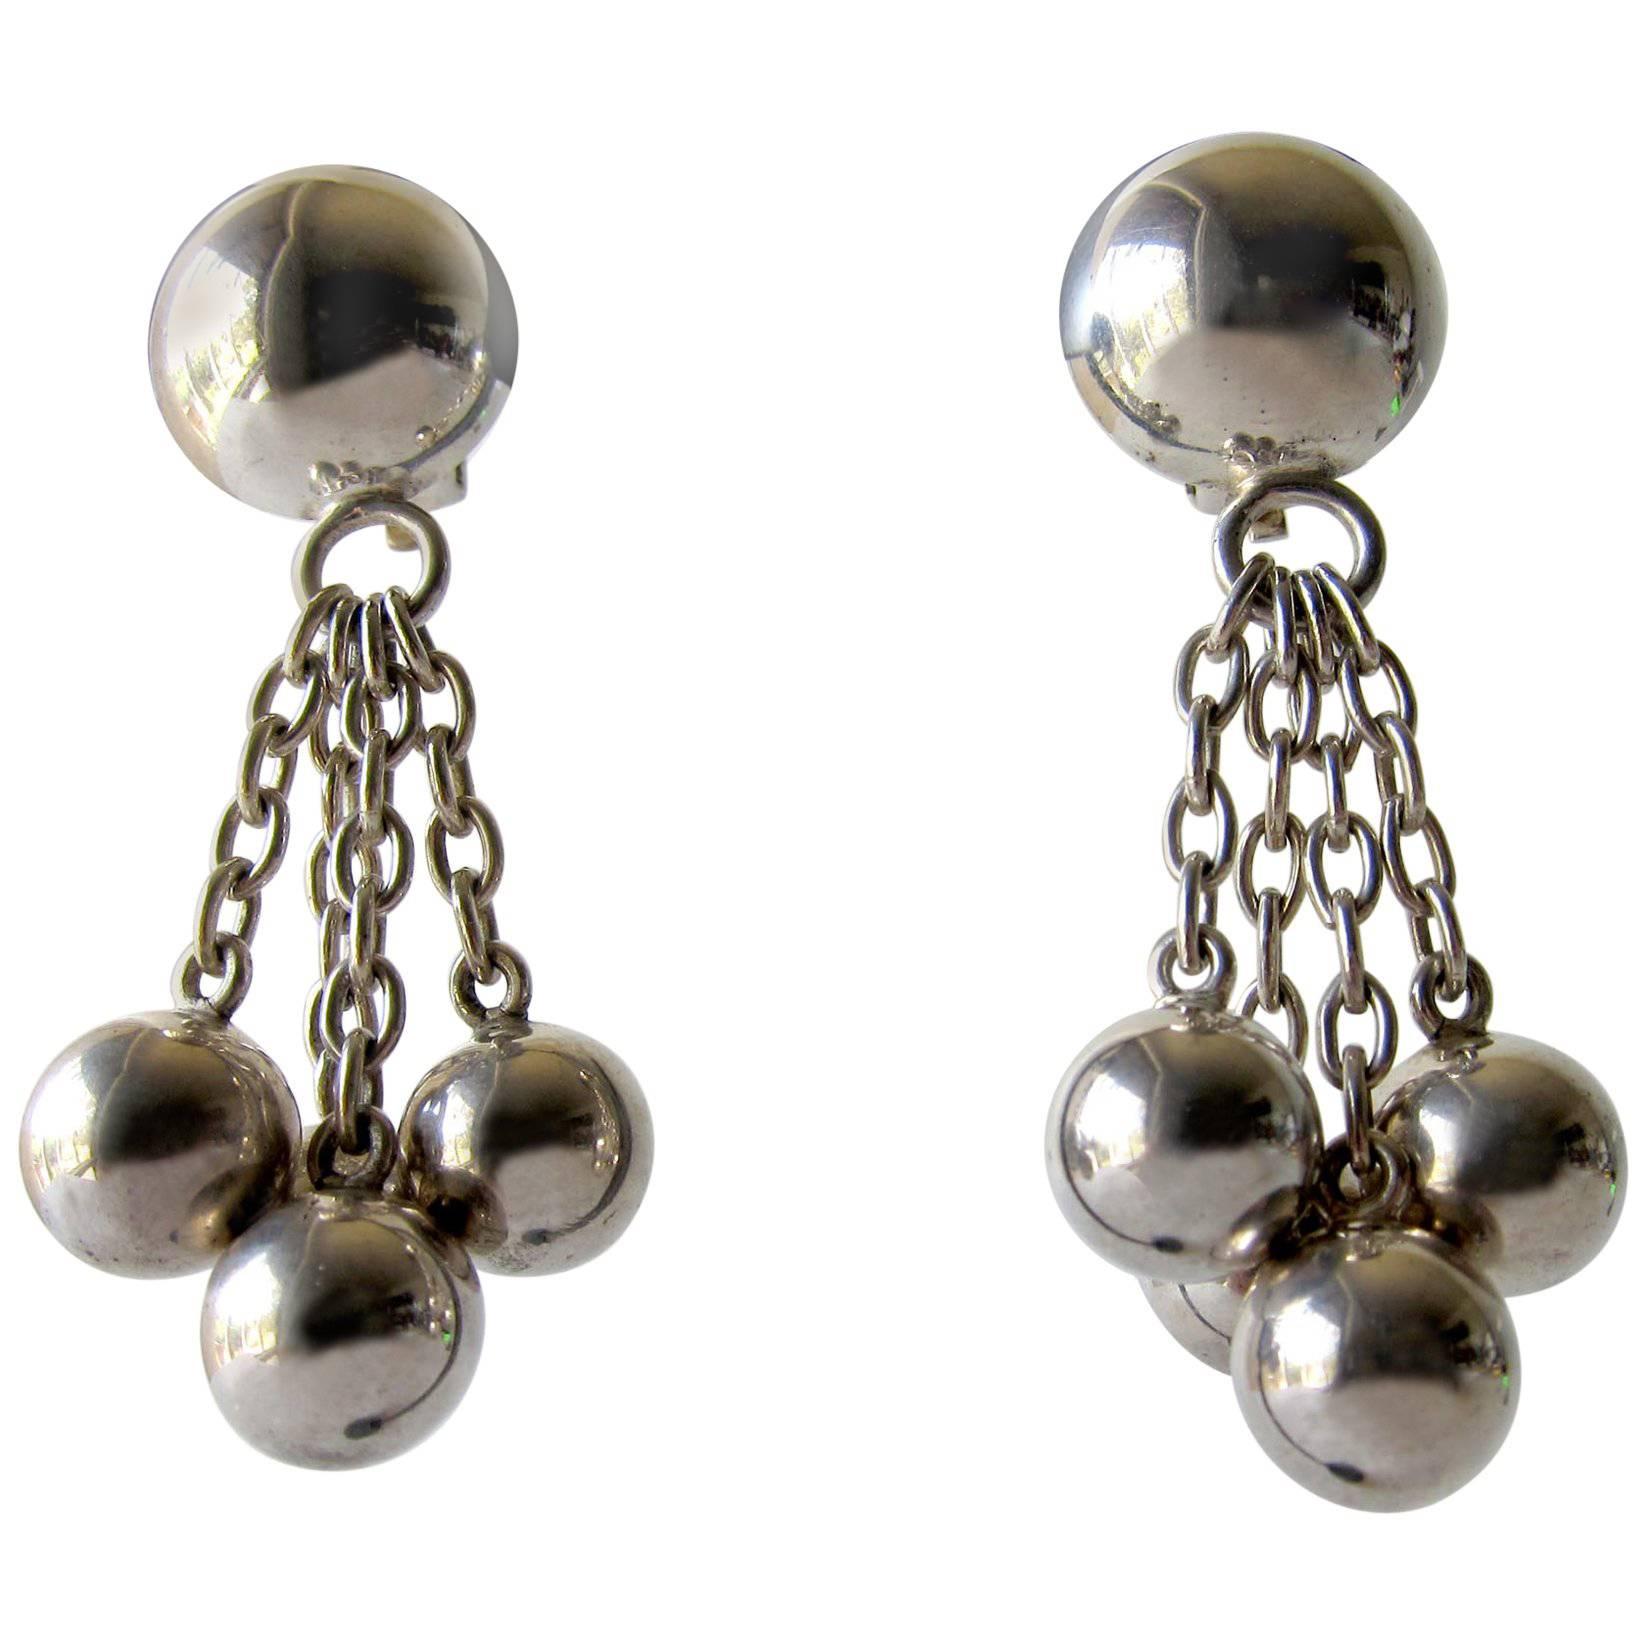 Puig Doria Sterling Silver Ball Chain Dangling Spanish Modernist Earrings